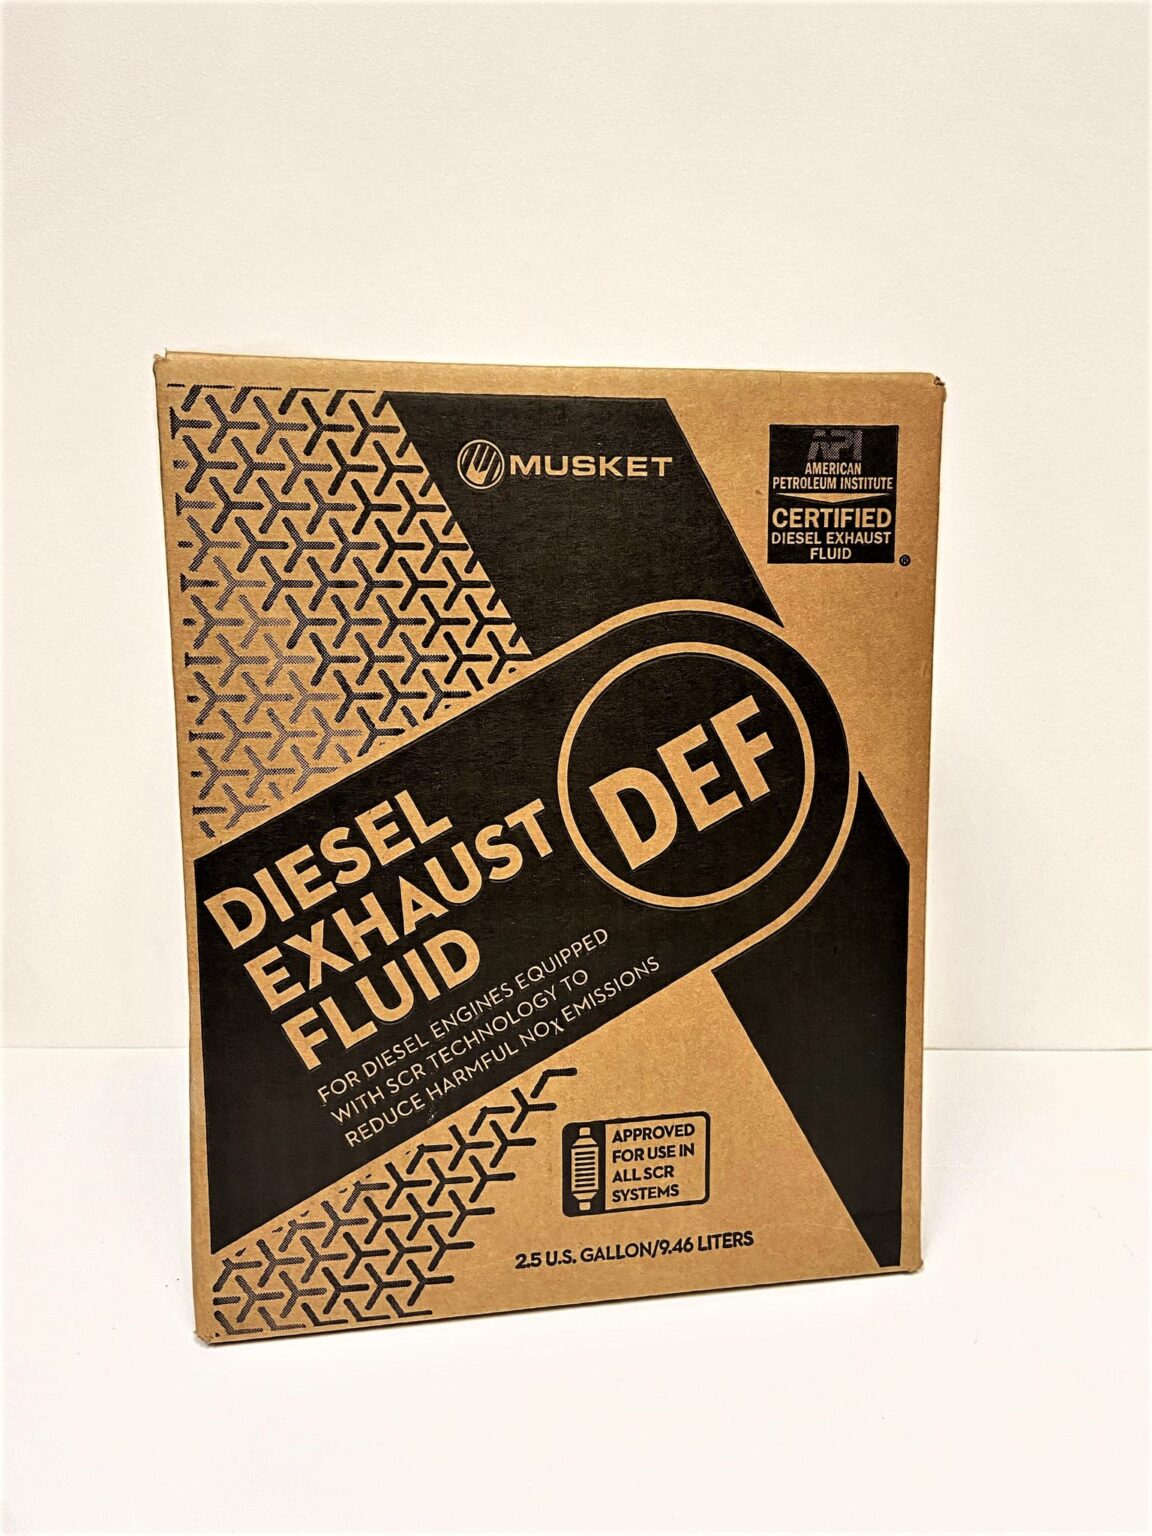 Buy Bulk DEF - Diesel Exhaust Fluid Online. - Yoder Oil